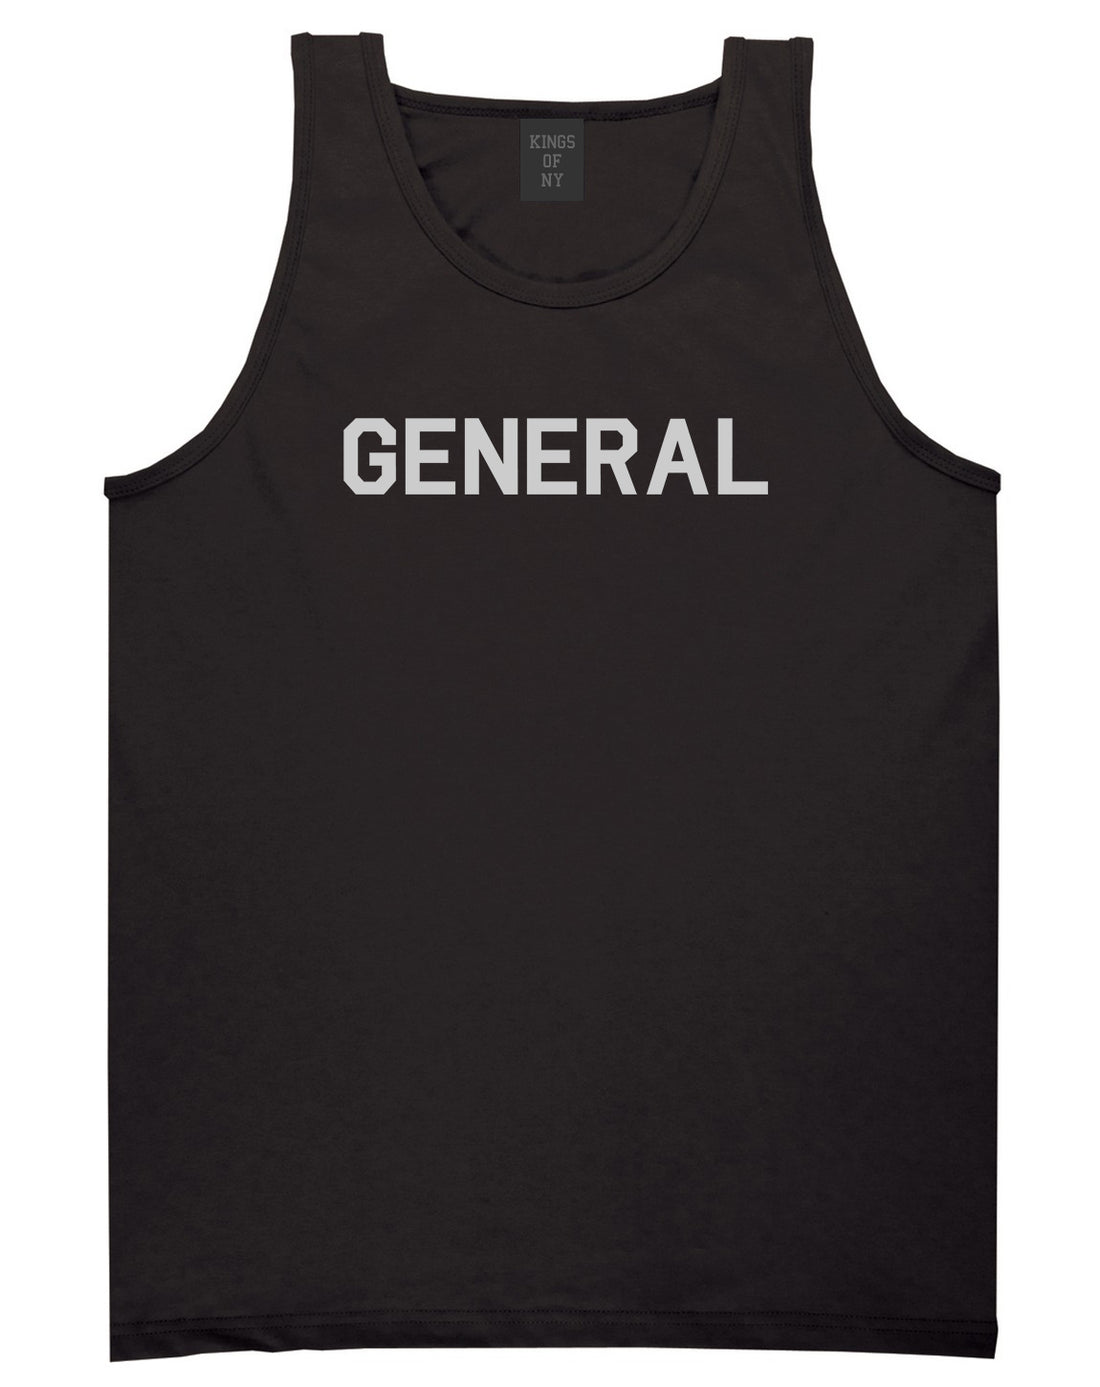 US General WW2 Mens Black Tank Top Shirt by KINGS OF NY